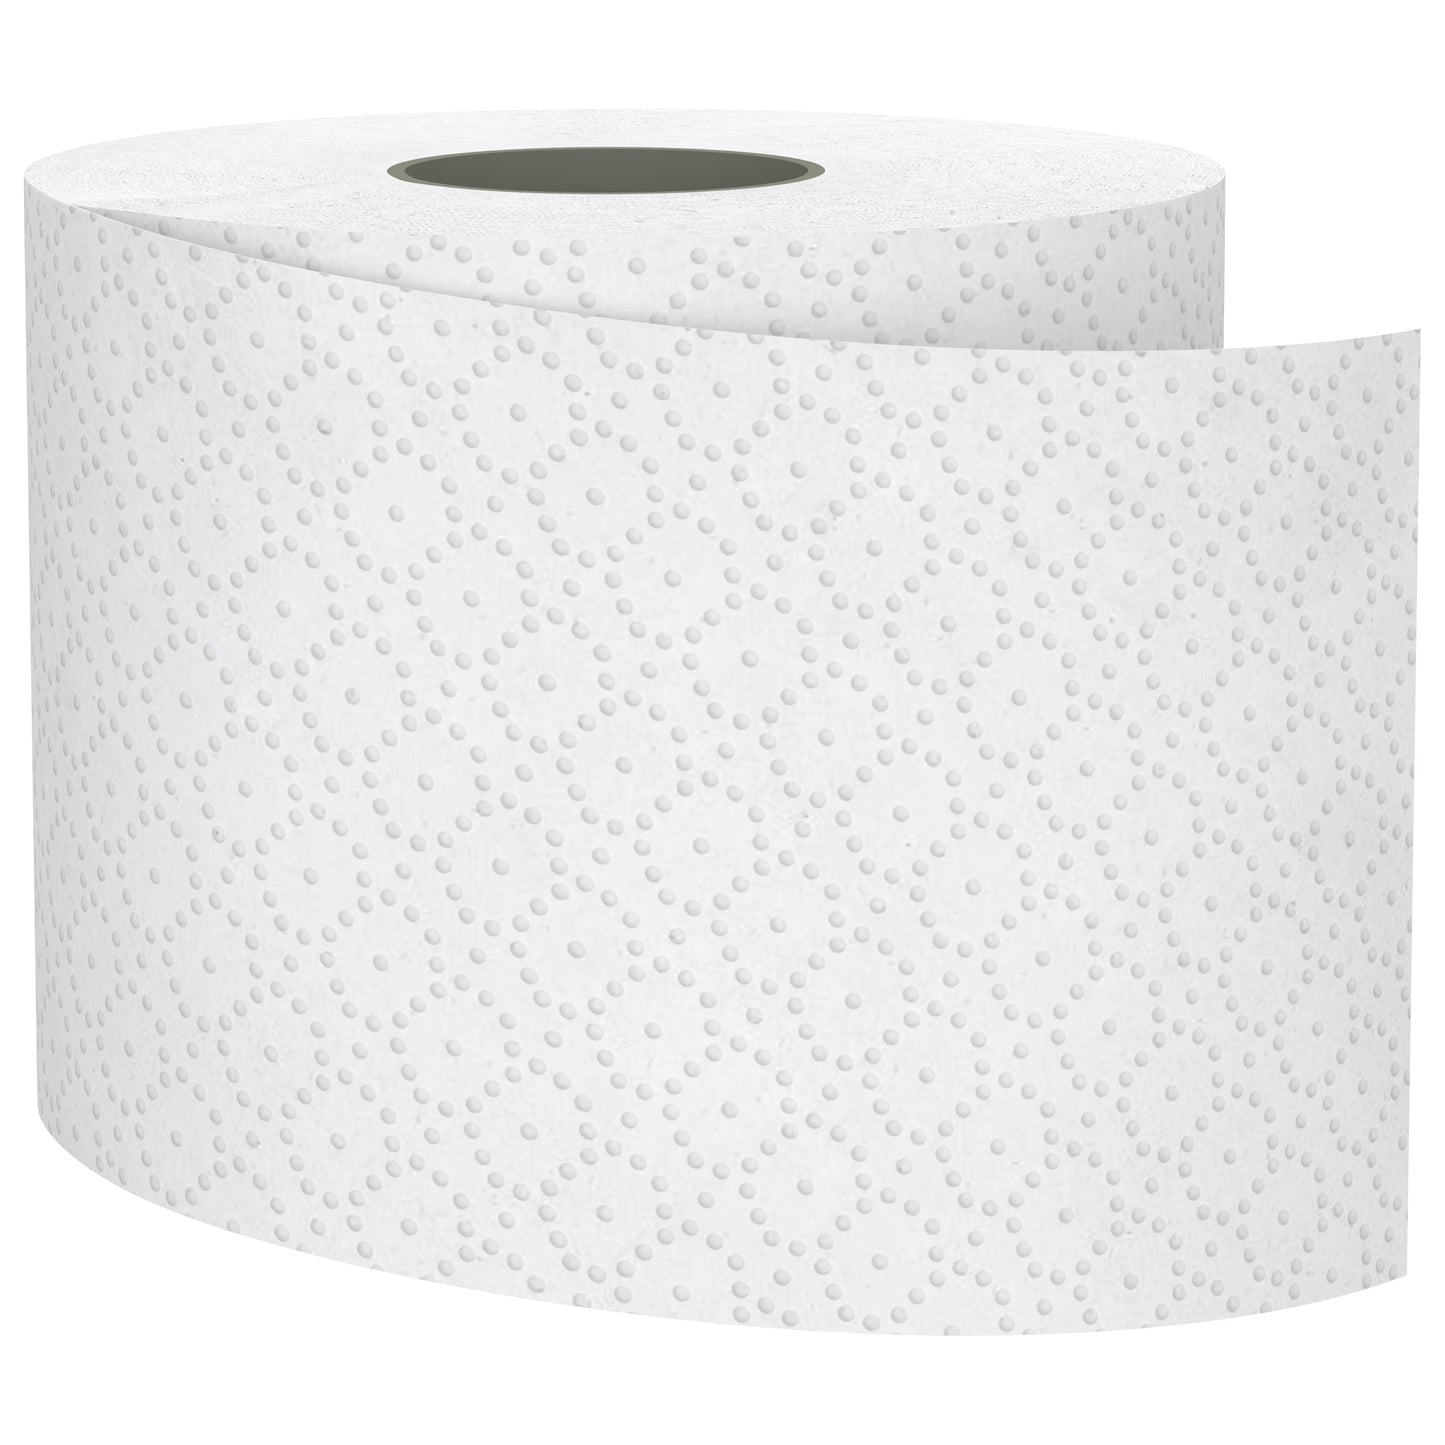 Satino Comfort Toilettenpapier Kleinrollen, 2-lagig, 48 Rollen